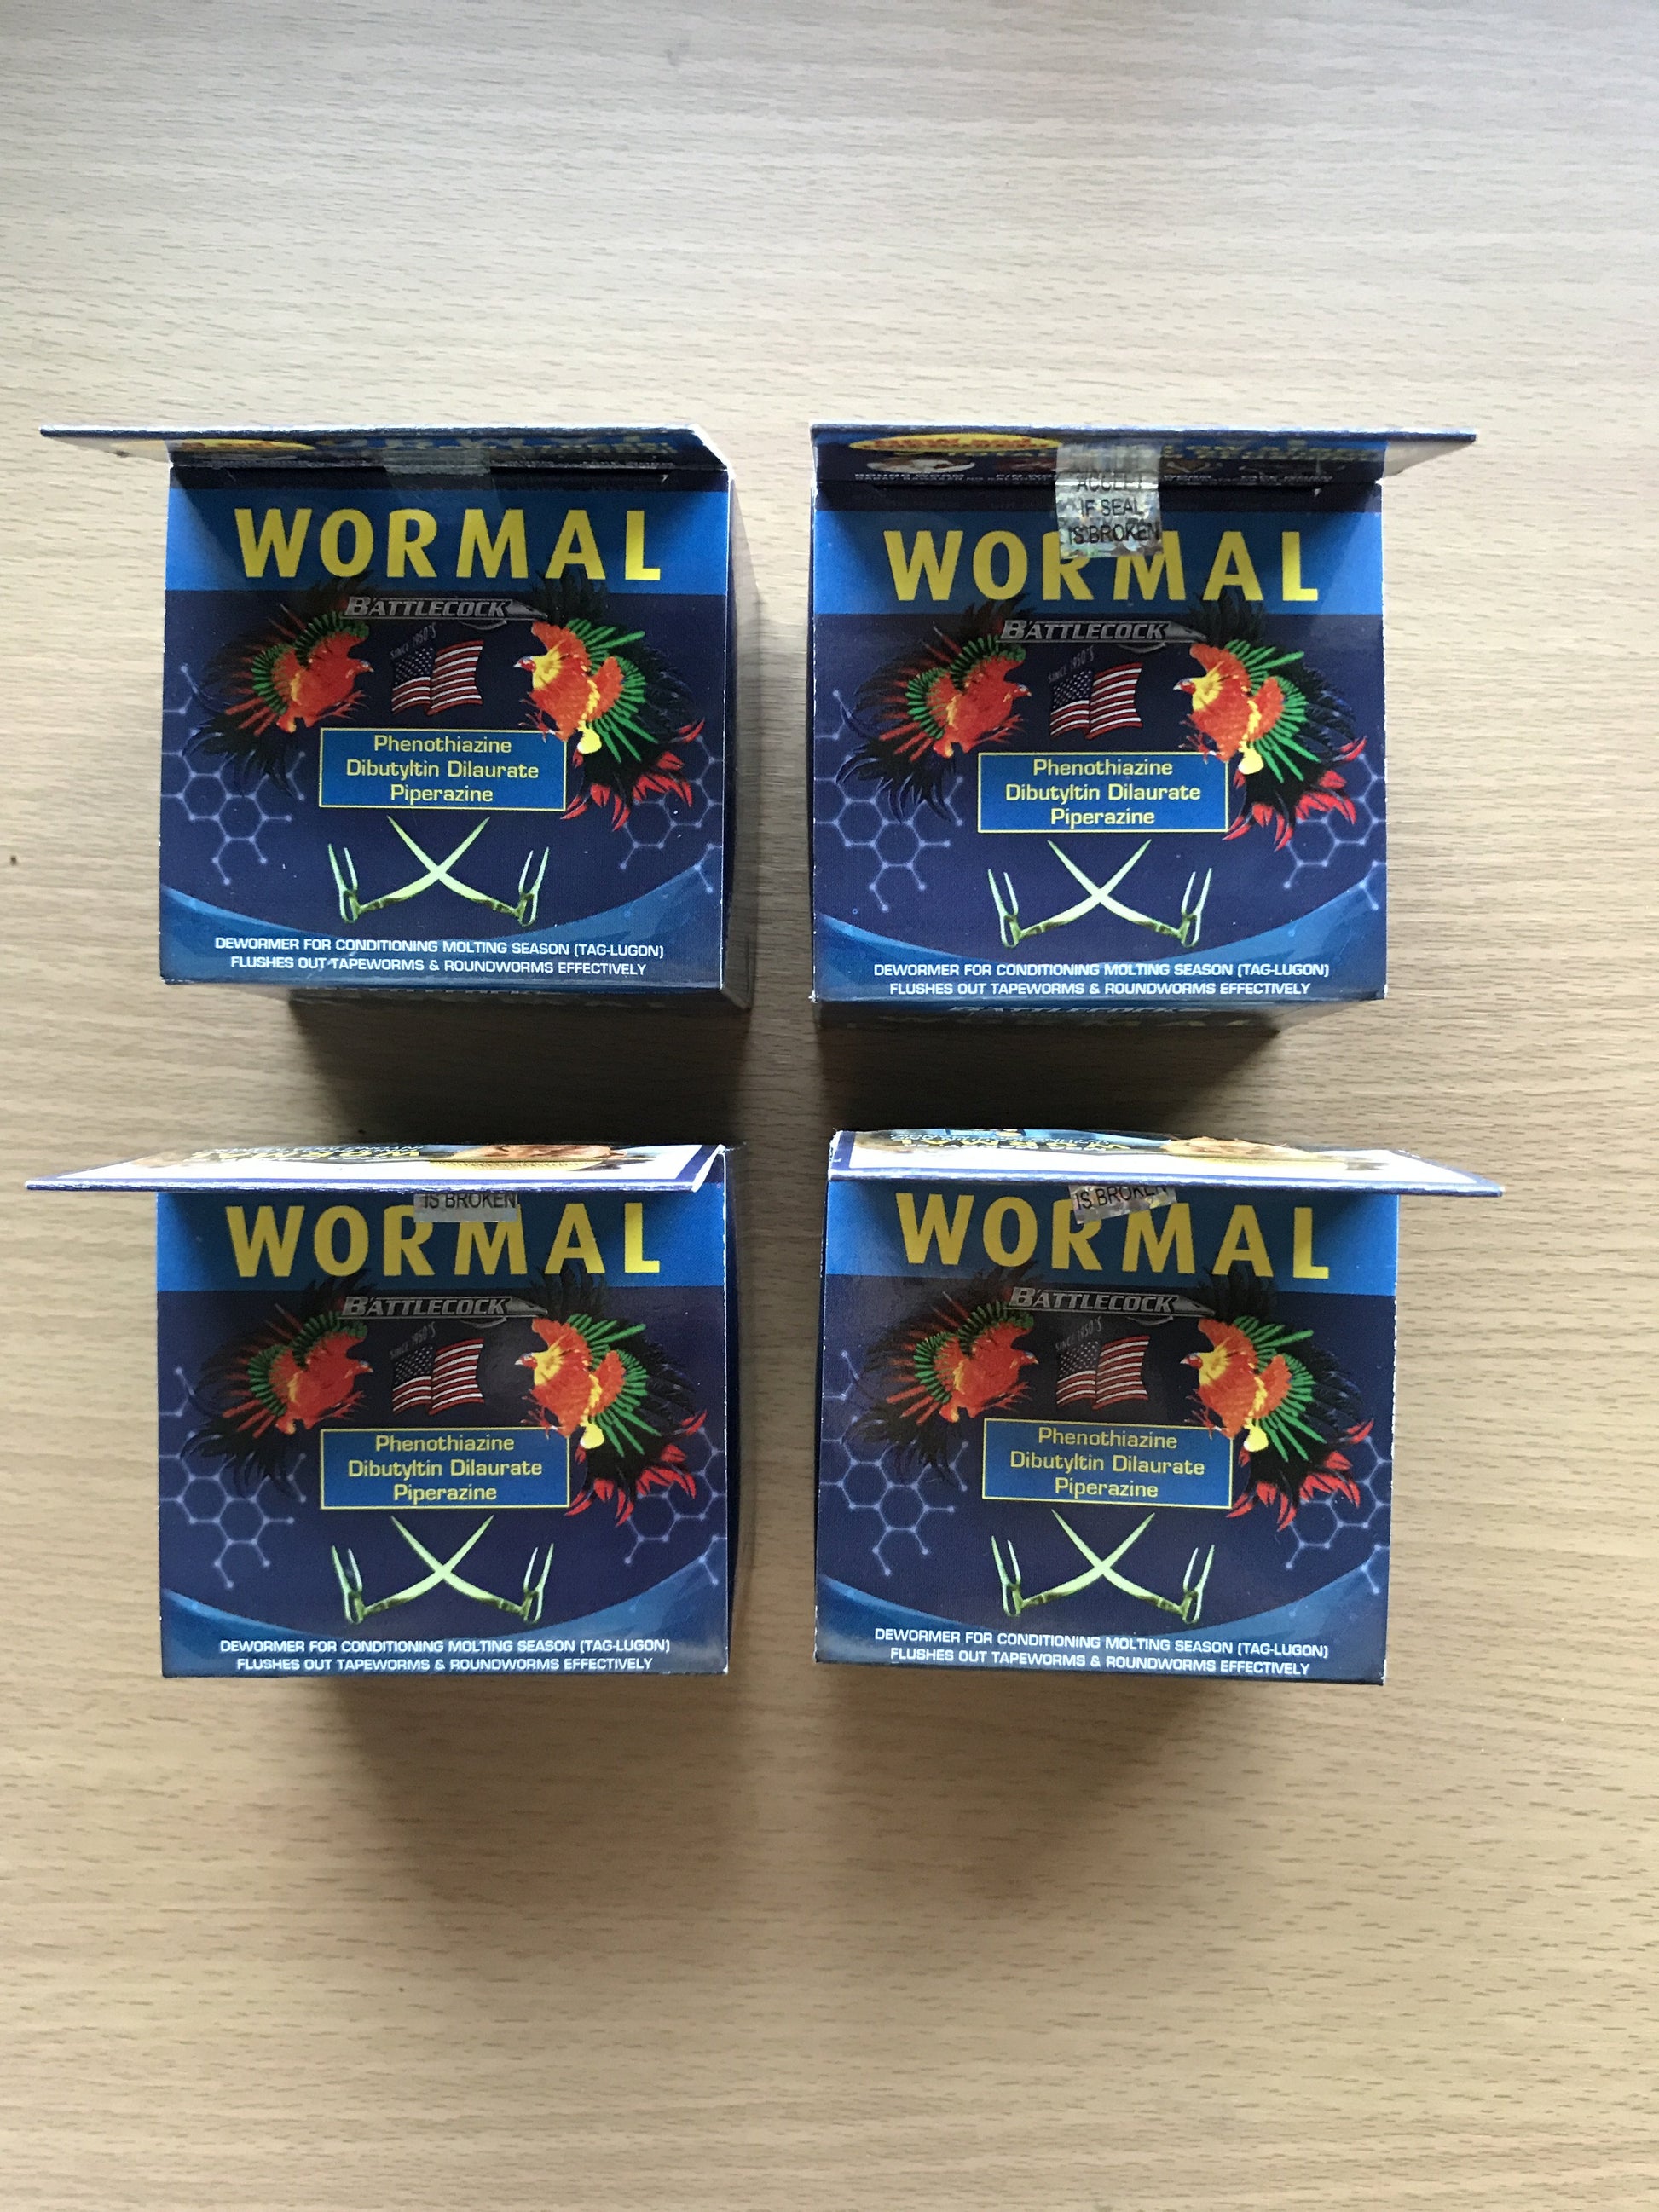 Wormal Maintenance Dewormer for Gamefowls